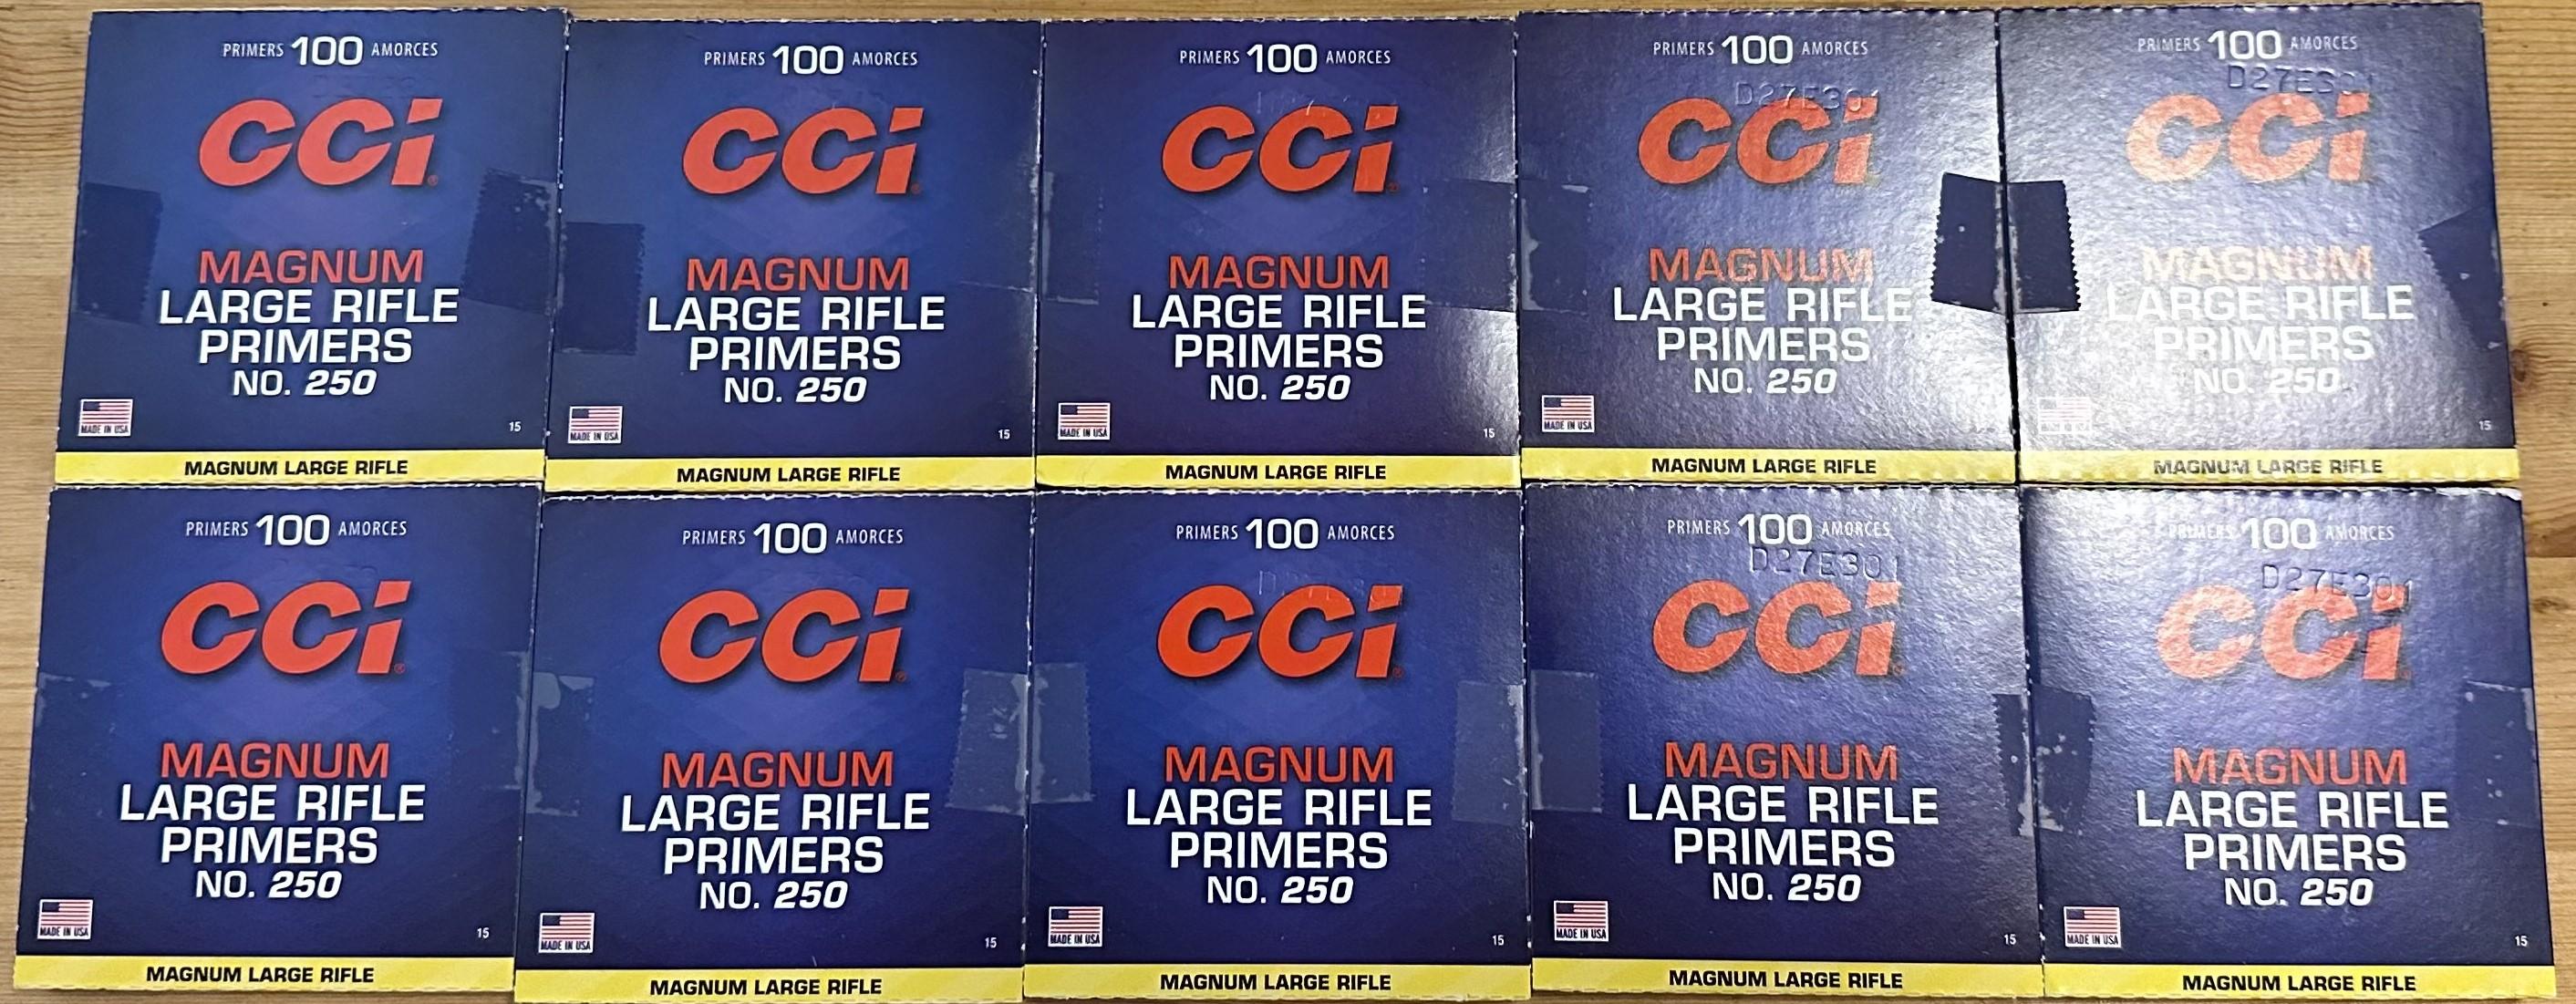 CCI250 large rifle magnum primer.jpg